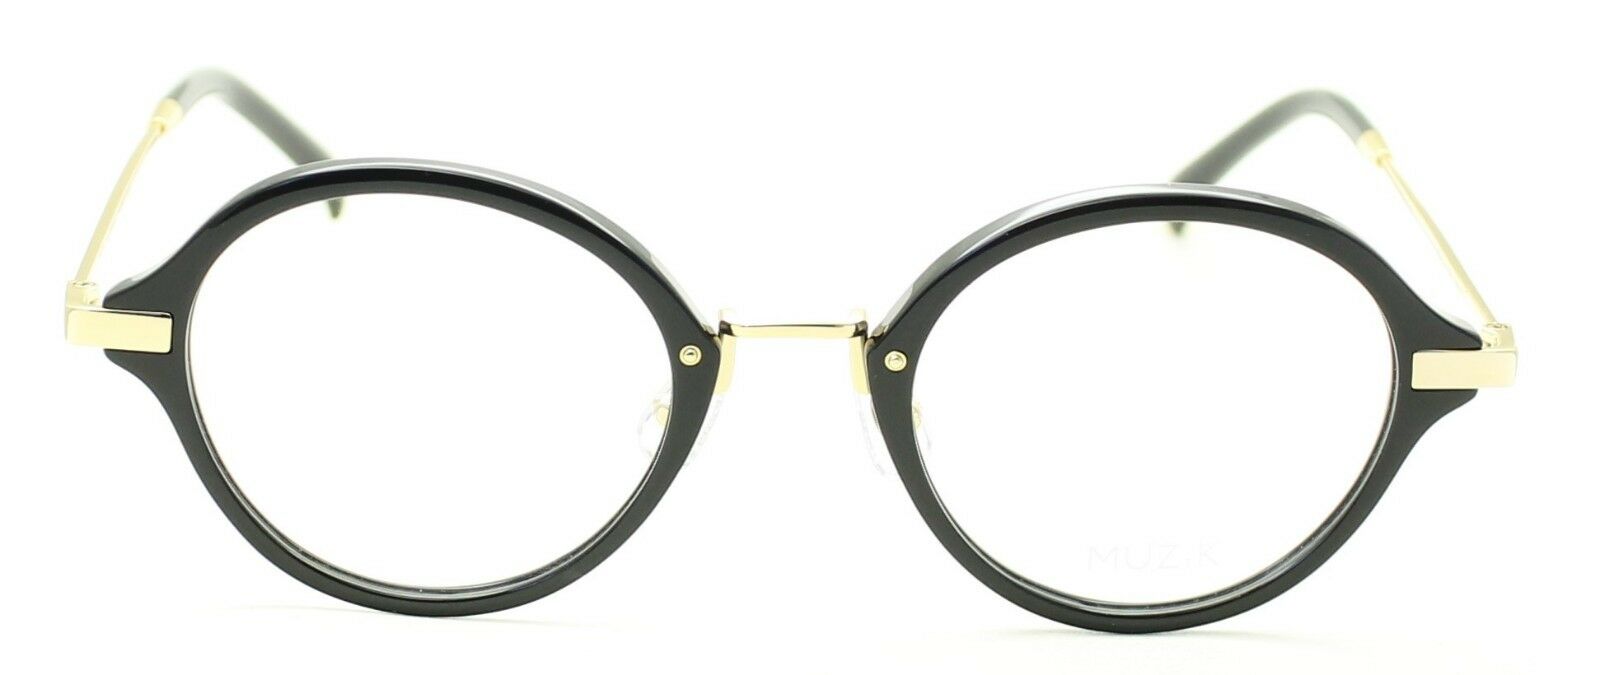 MUZIK PISTIL TRACK 1.G Eyewear FRAMES Eyeglasses RX Optical Glasses New - Korea